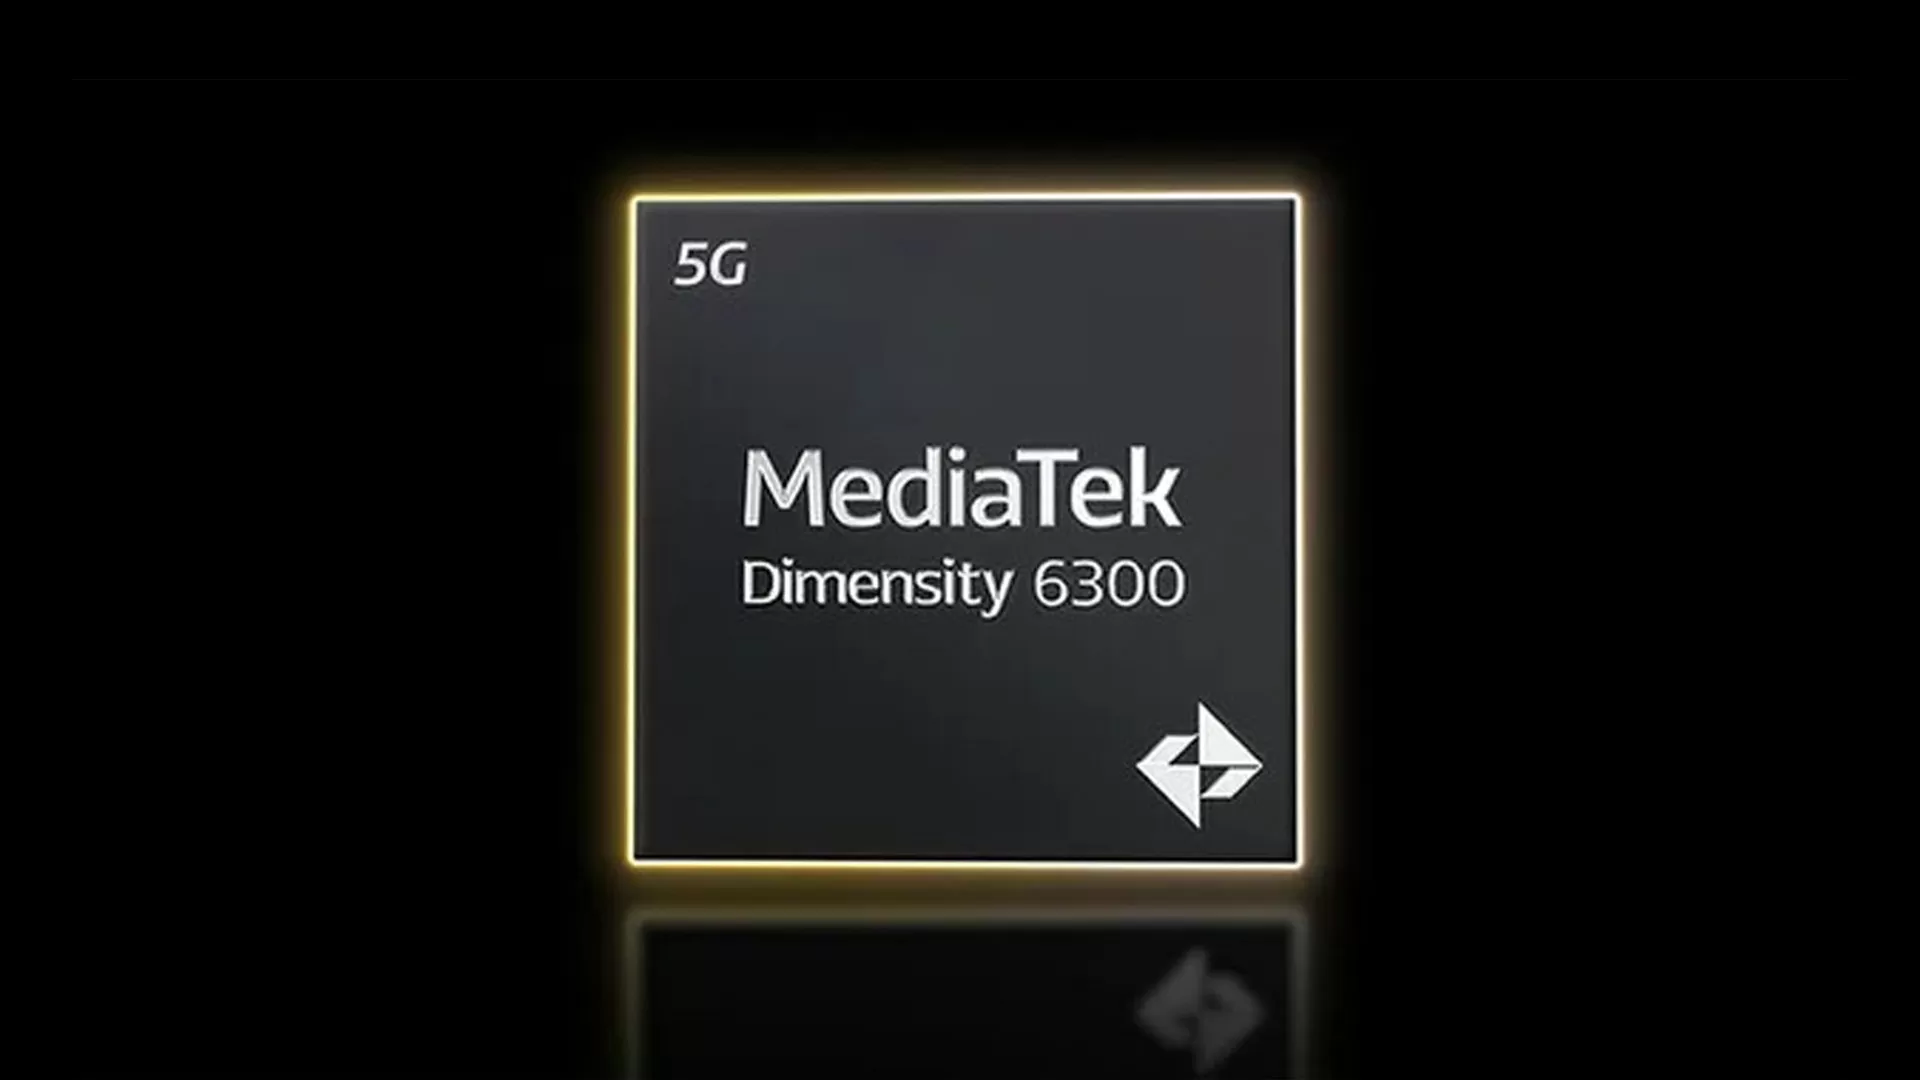 MediaTek Dimensity 6300: here is the new mid-range SoC